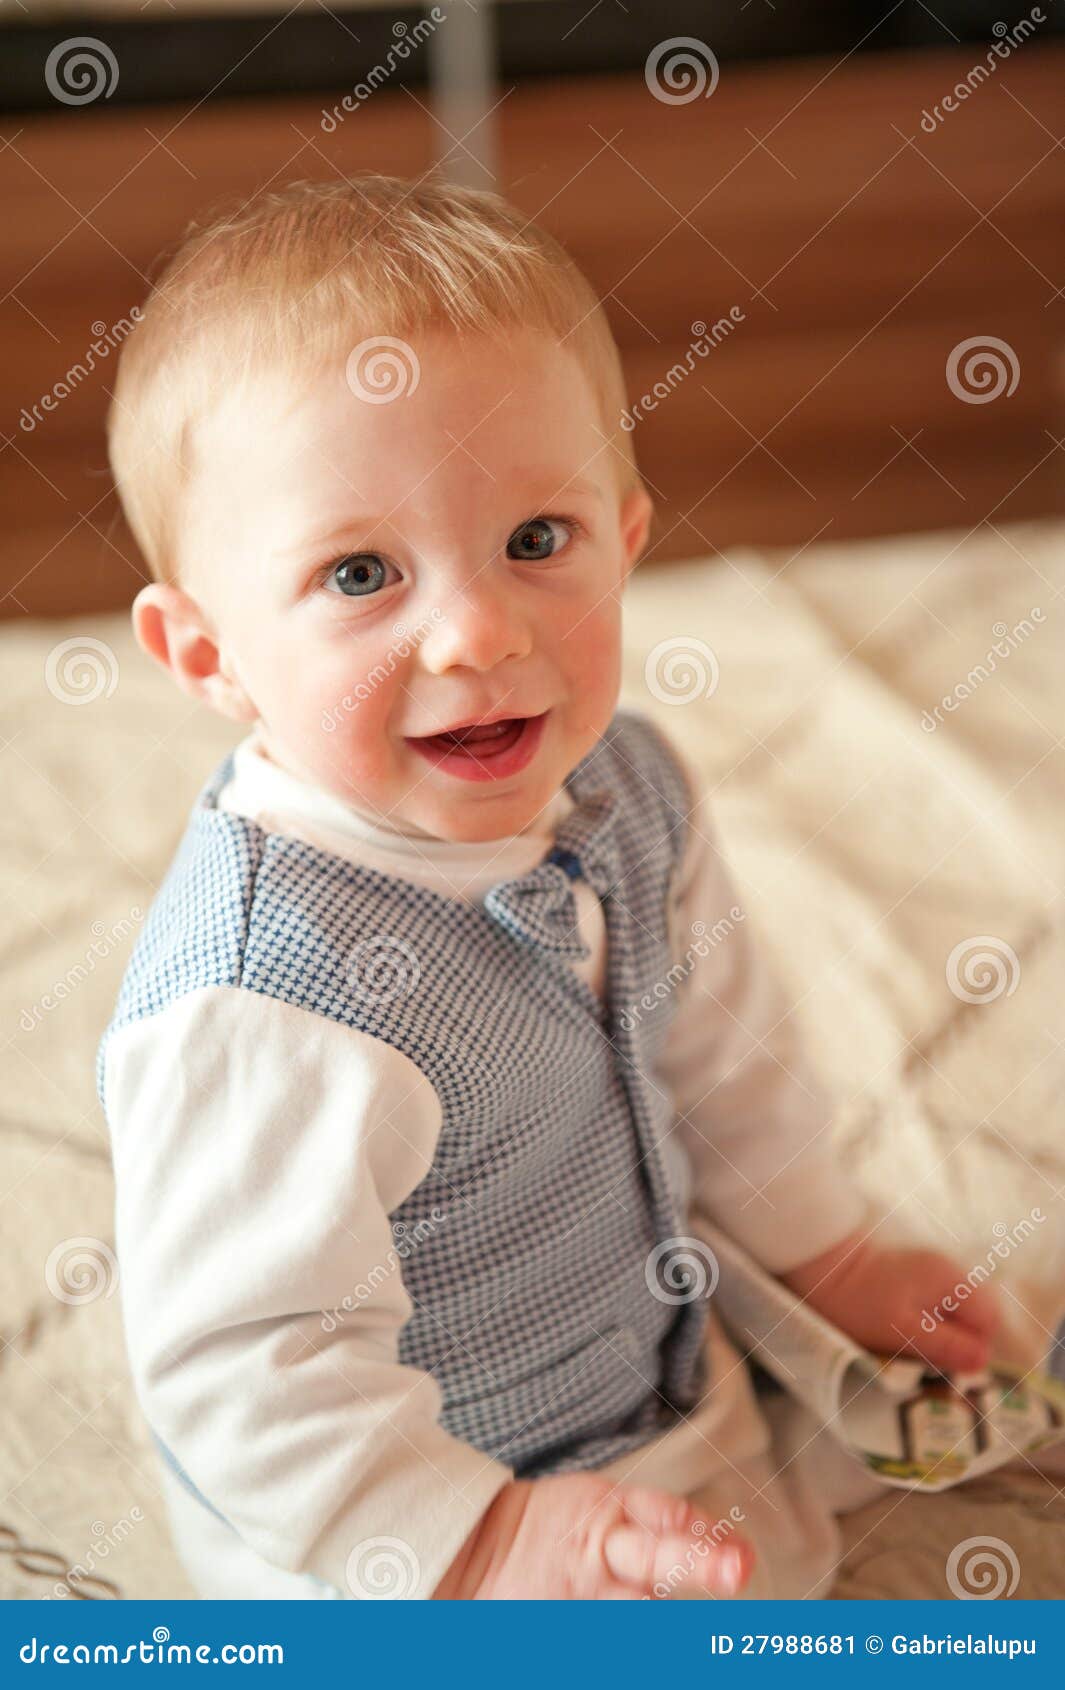 Baby smiling stock image. Image of boys, blond, child - 27988681